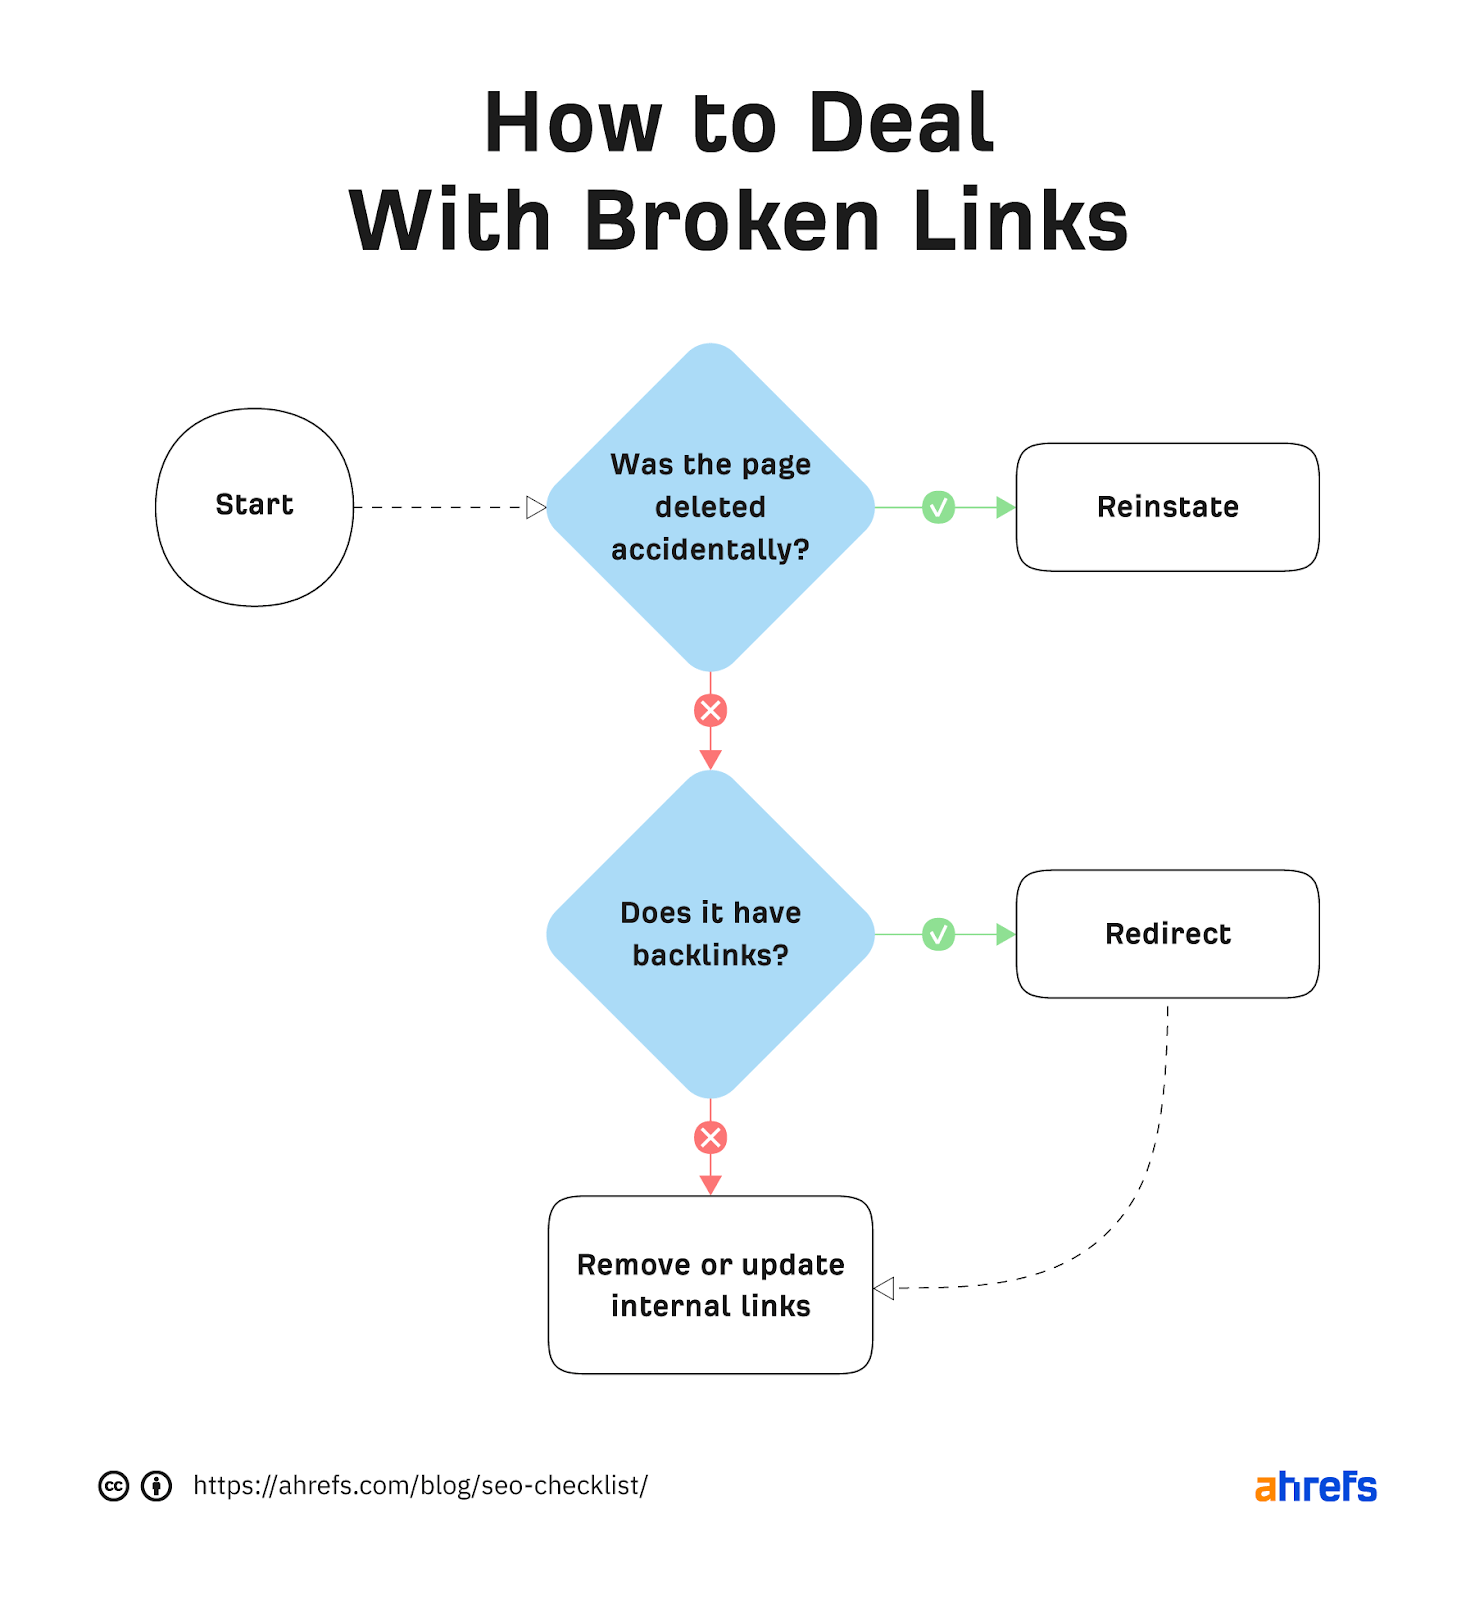 Flowchart explaining how to deal with broken links